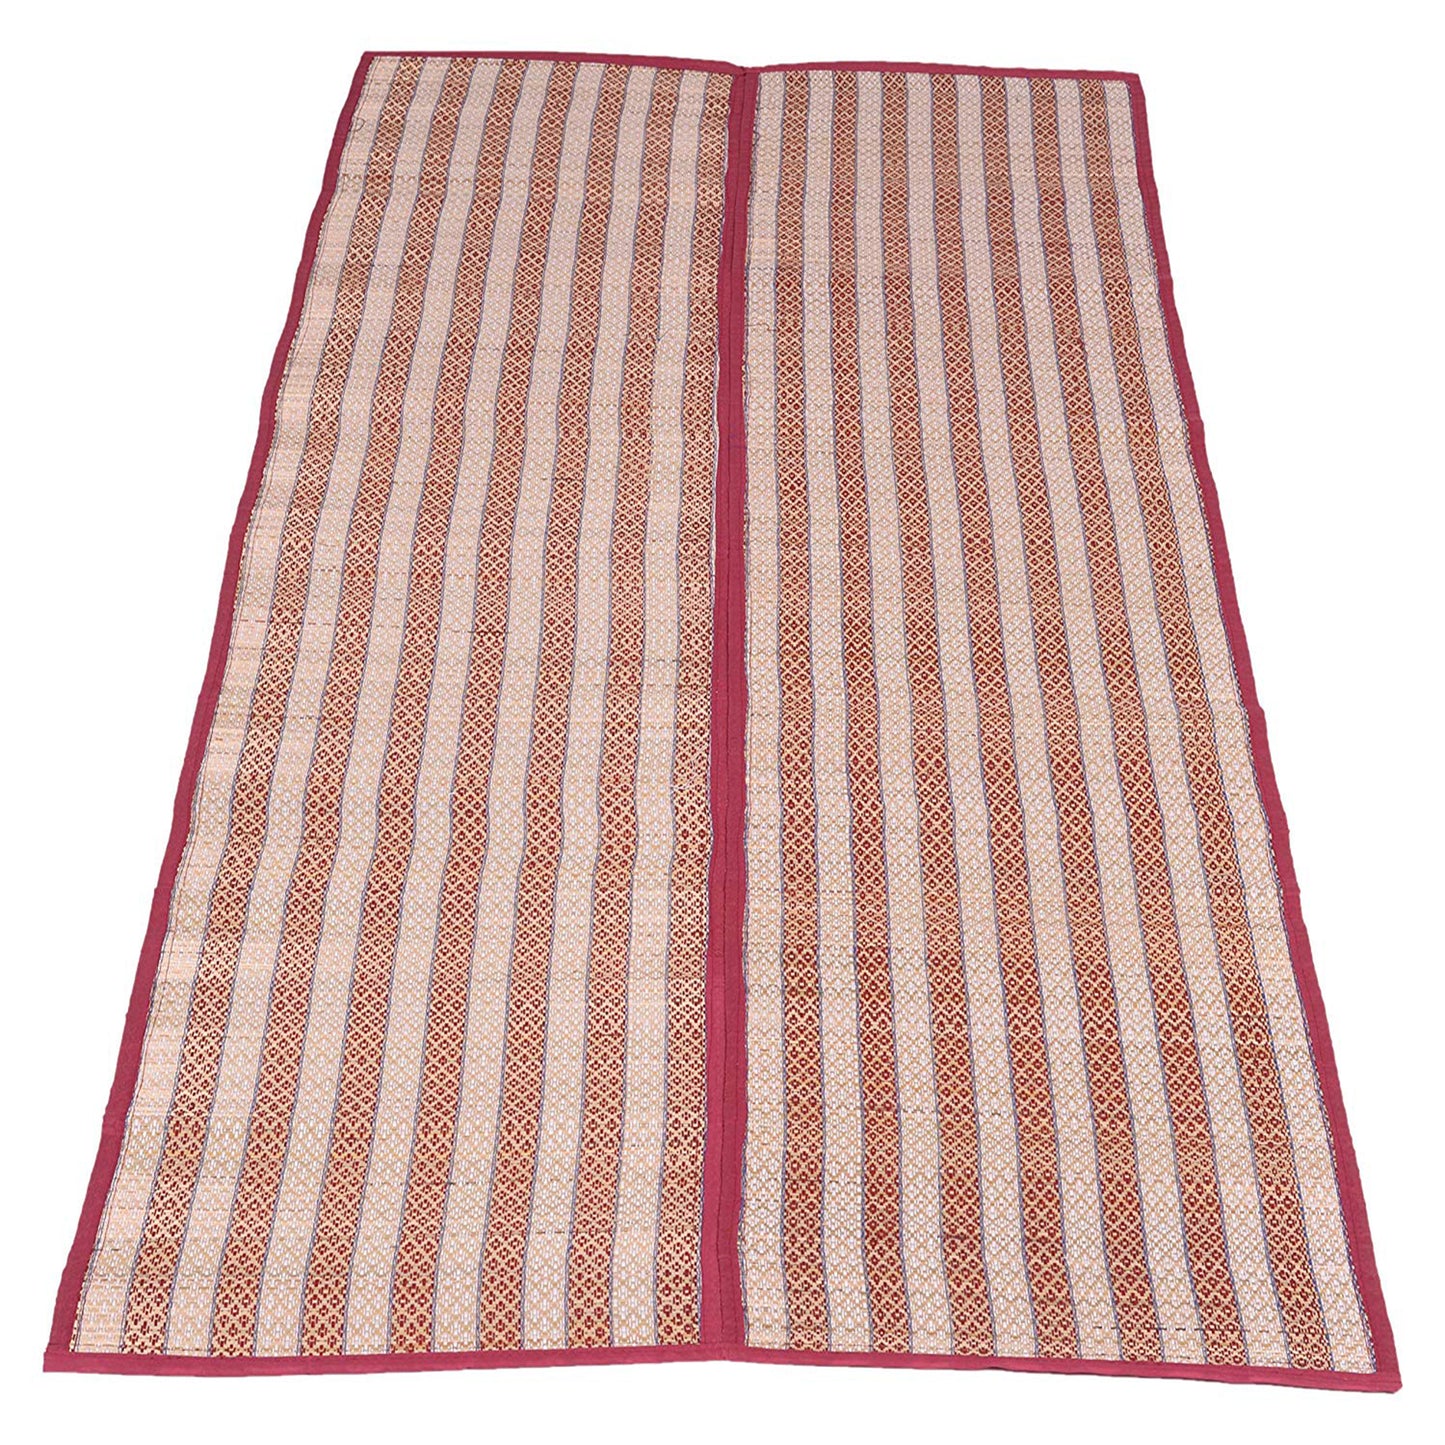 Chatai  Floor Mat Foldable handwoven Organic made of Madurkathi Grass for Sleeping, Sitting on Floor - T3-26